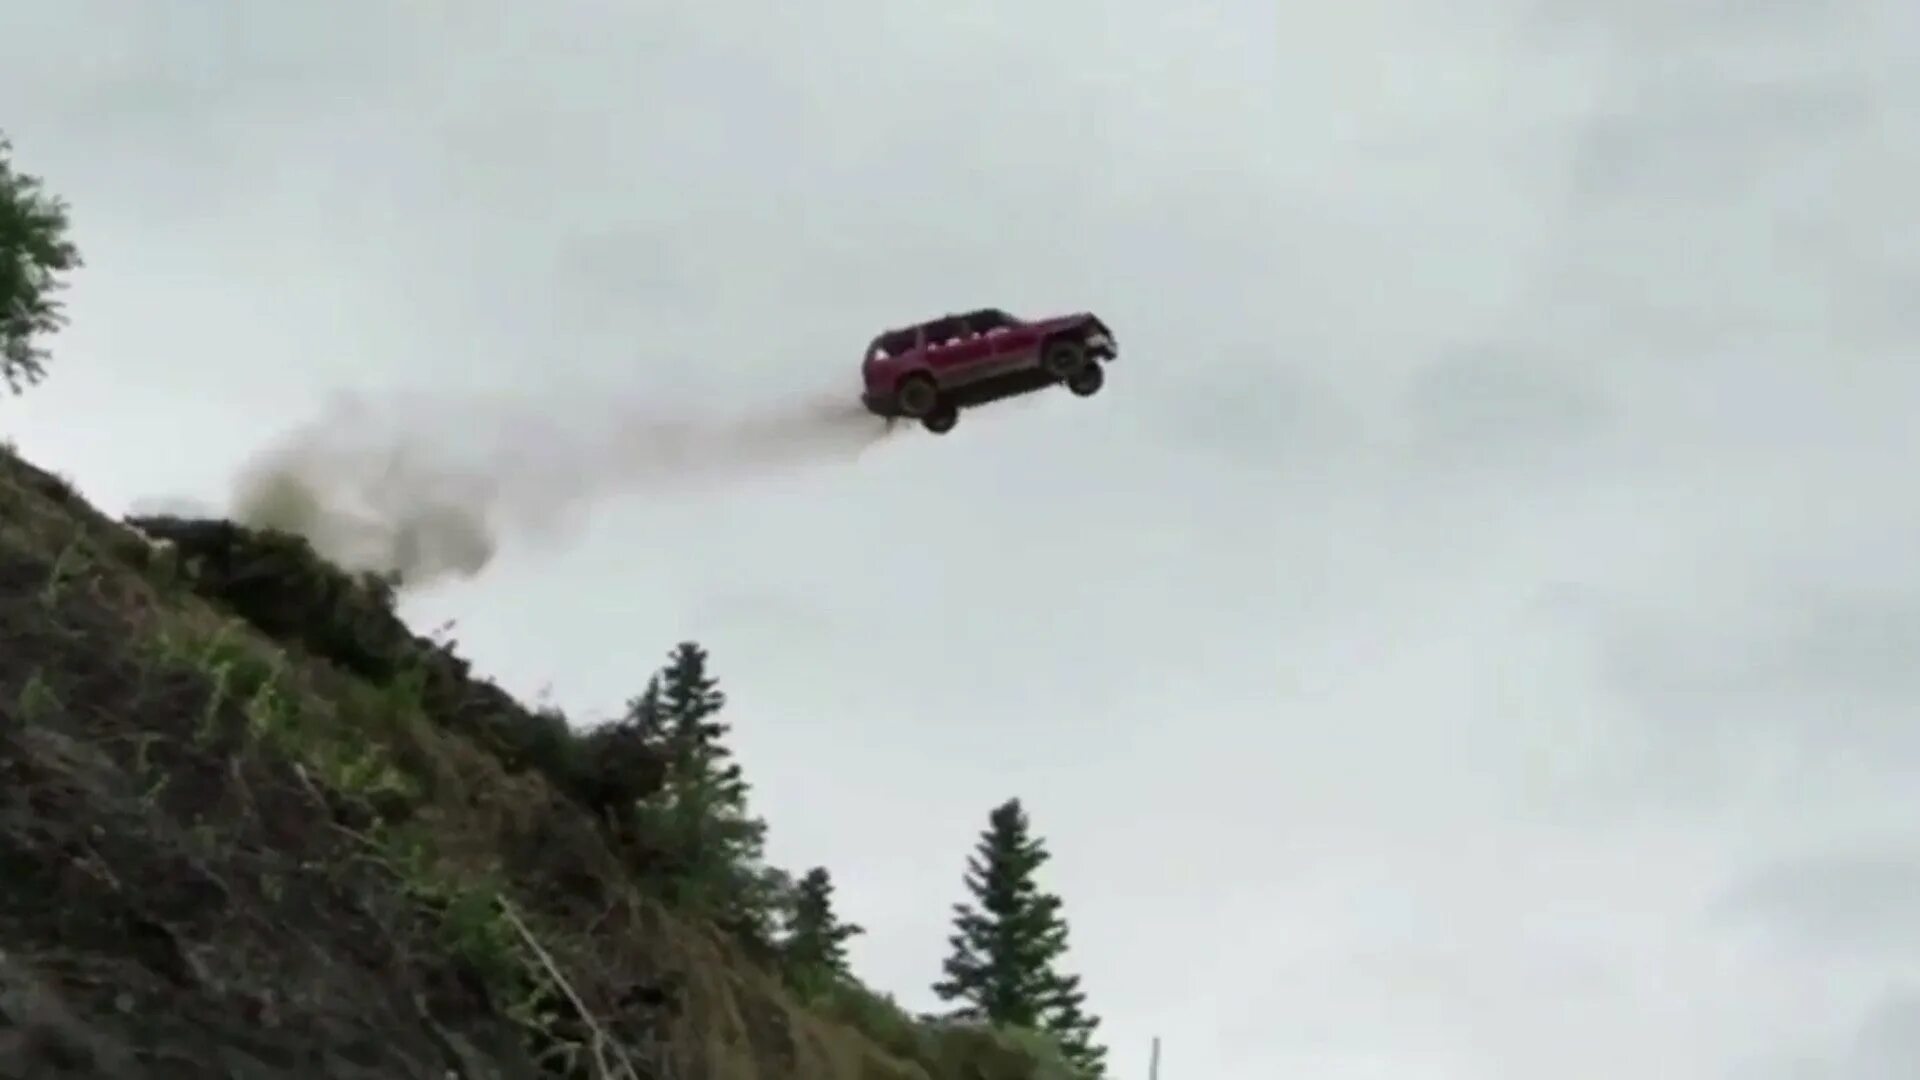 Машина на обрыве. Машина падает с горы. Машина падает с обрыва. Машина вылетает с горы.